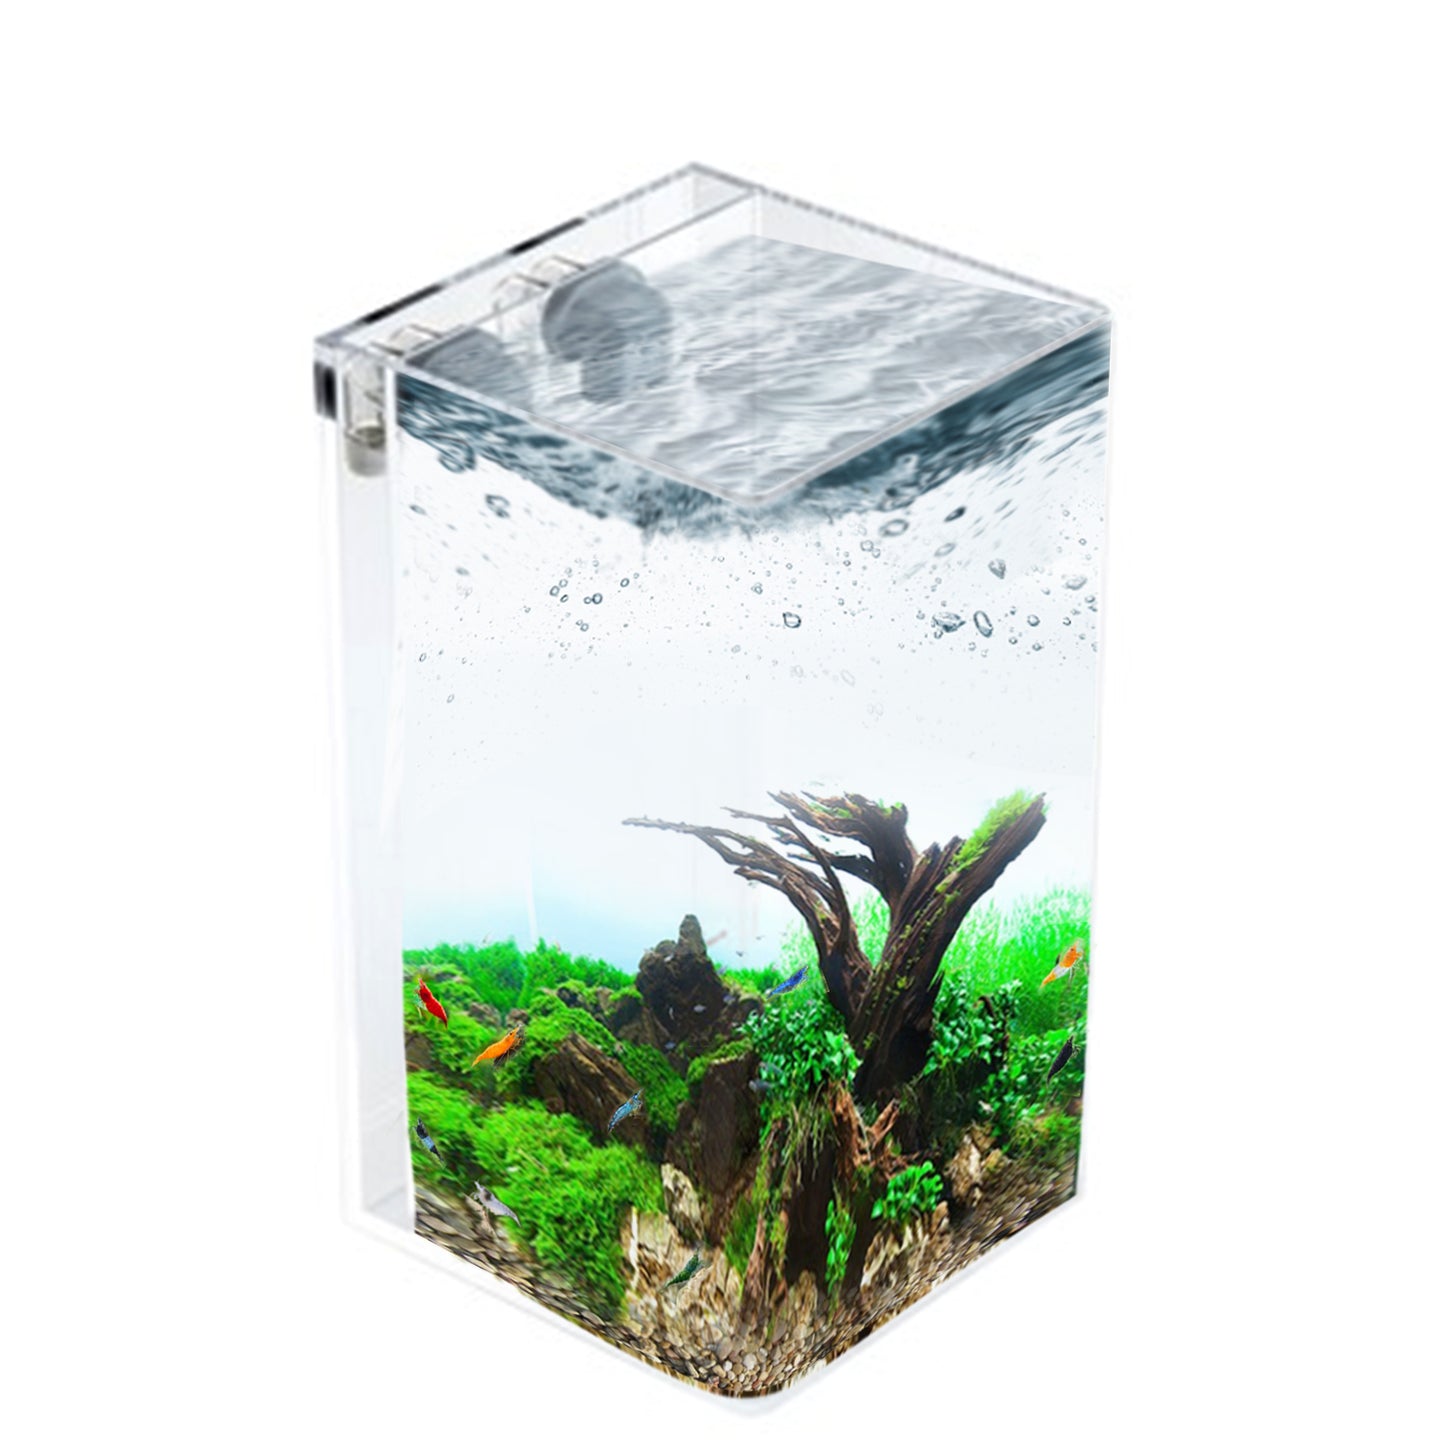 2.5 GALLON Self-Cleaning Aquarium | Rimless | Seamless | Tall Cube